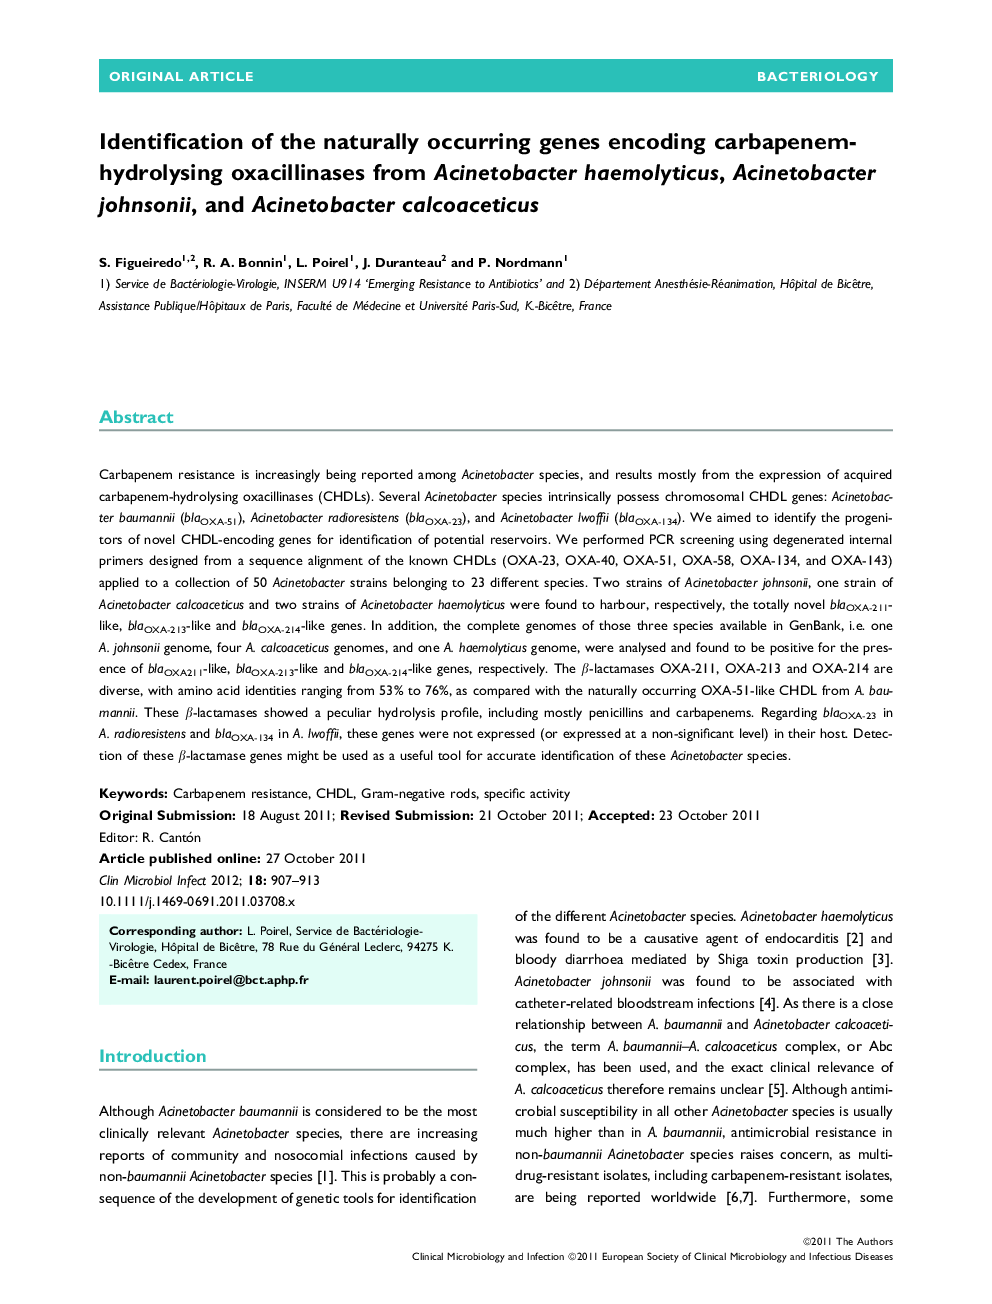 Identification of the naturally occurring genes encoding carbapenem-hydrolysing oxacillinases from Acinetobacter haemolyticus, Acinetobacter johnsonii, and Acinetobacter calcoaceticus 